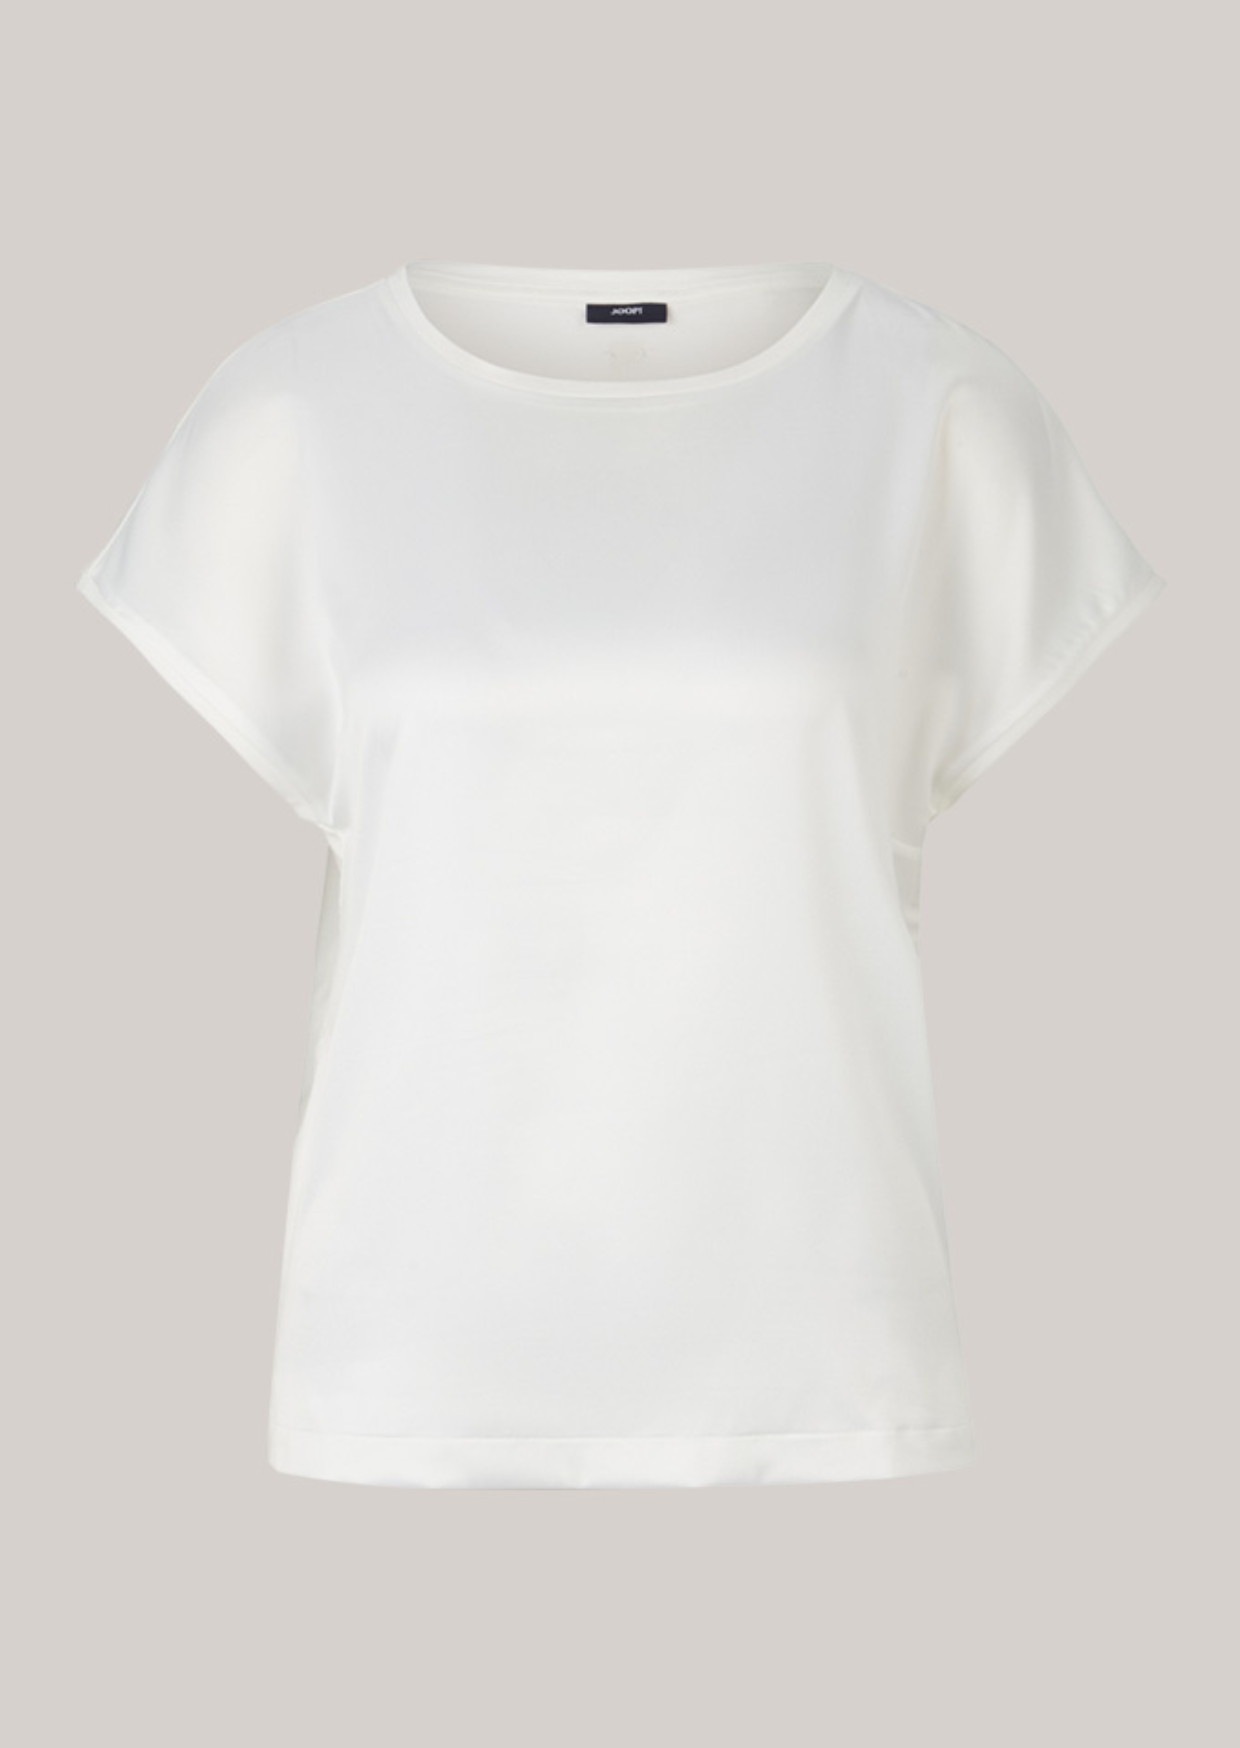 joop T-shirt off white 